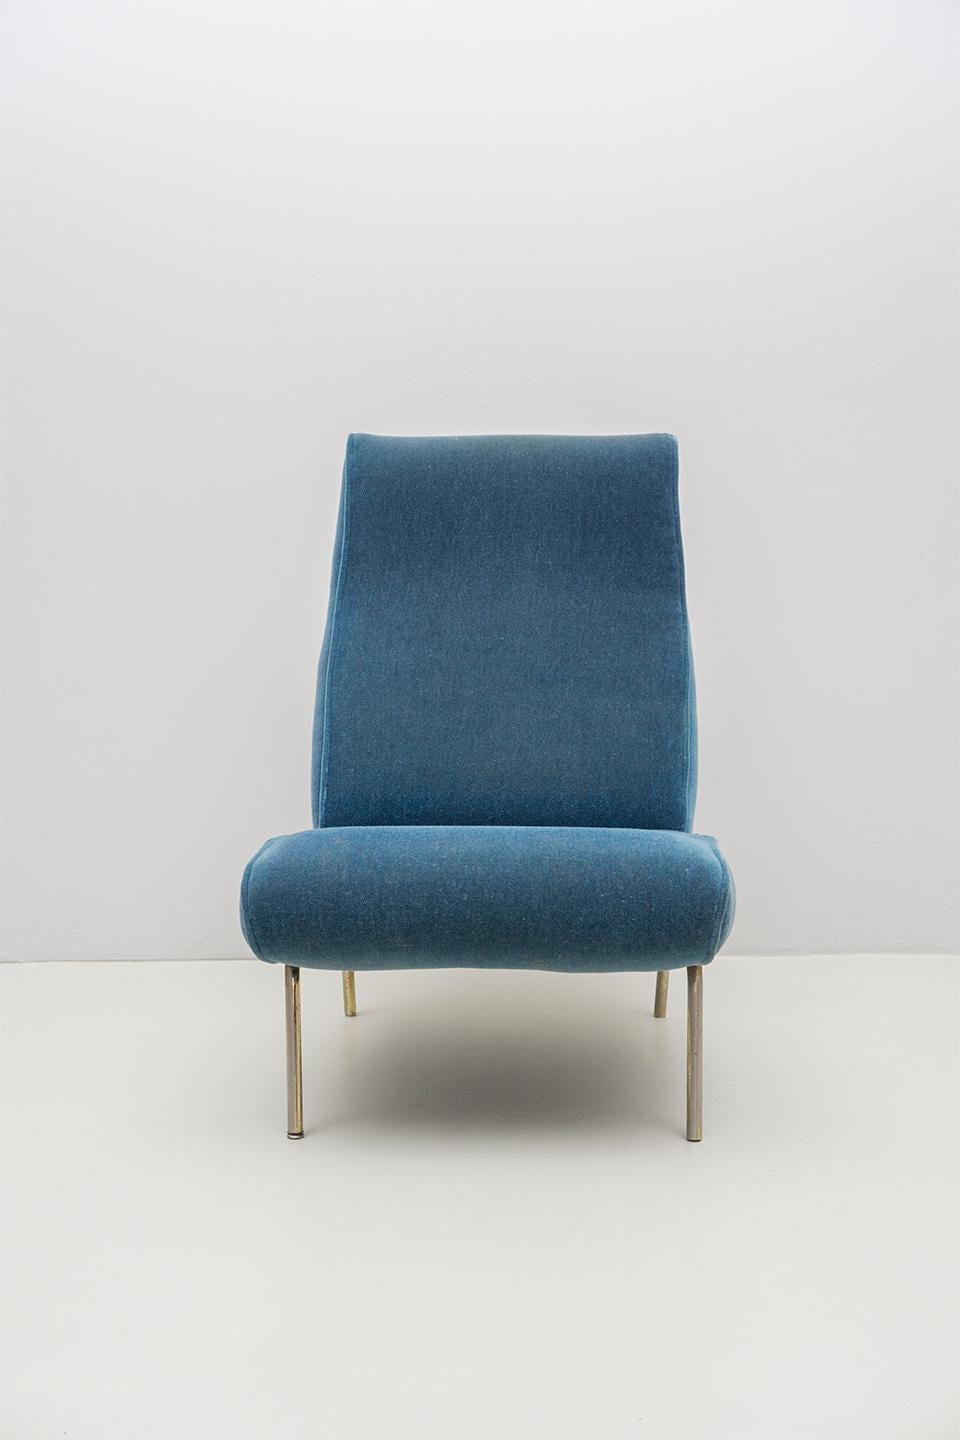 Italian Delfino Lounge Chair with Ottoman, 1950s Blue Velvet, by Erberto Carboni, Arflex For Sale